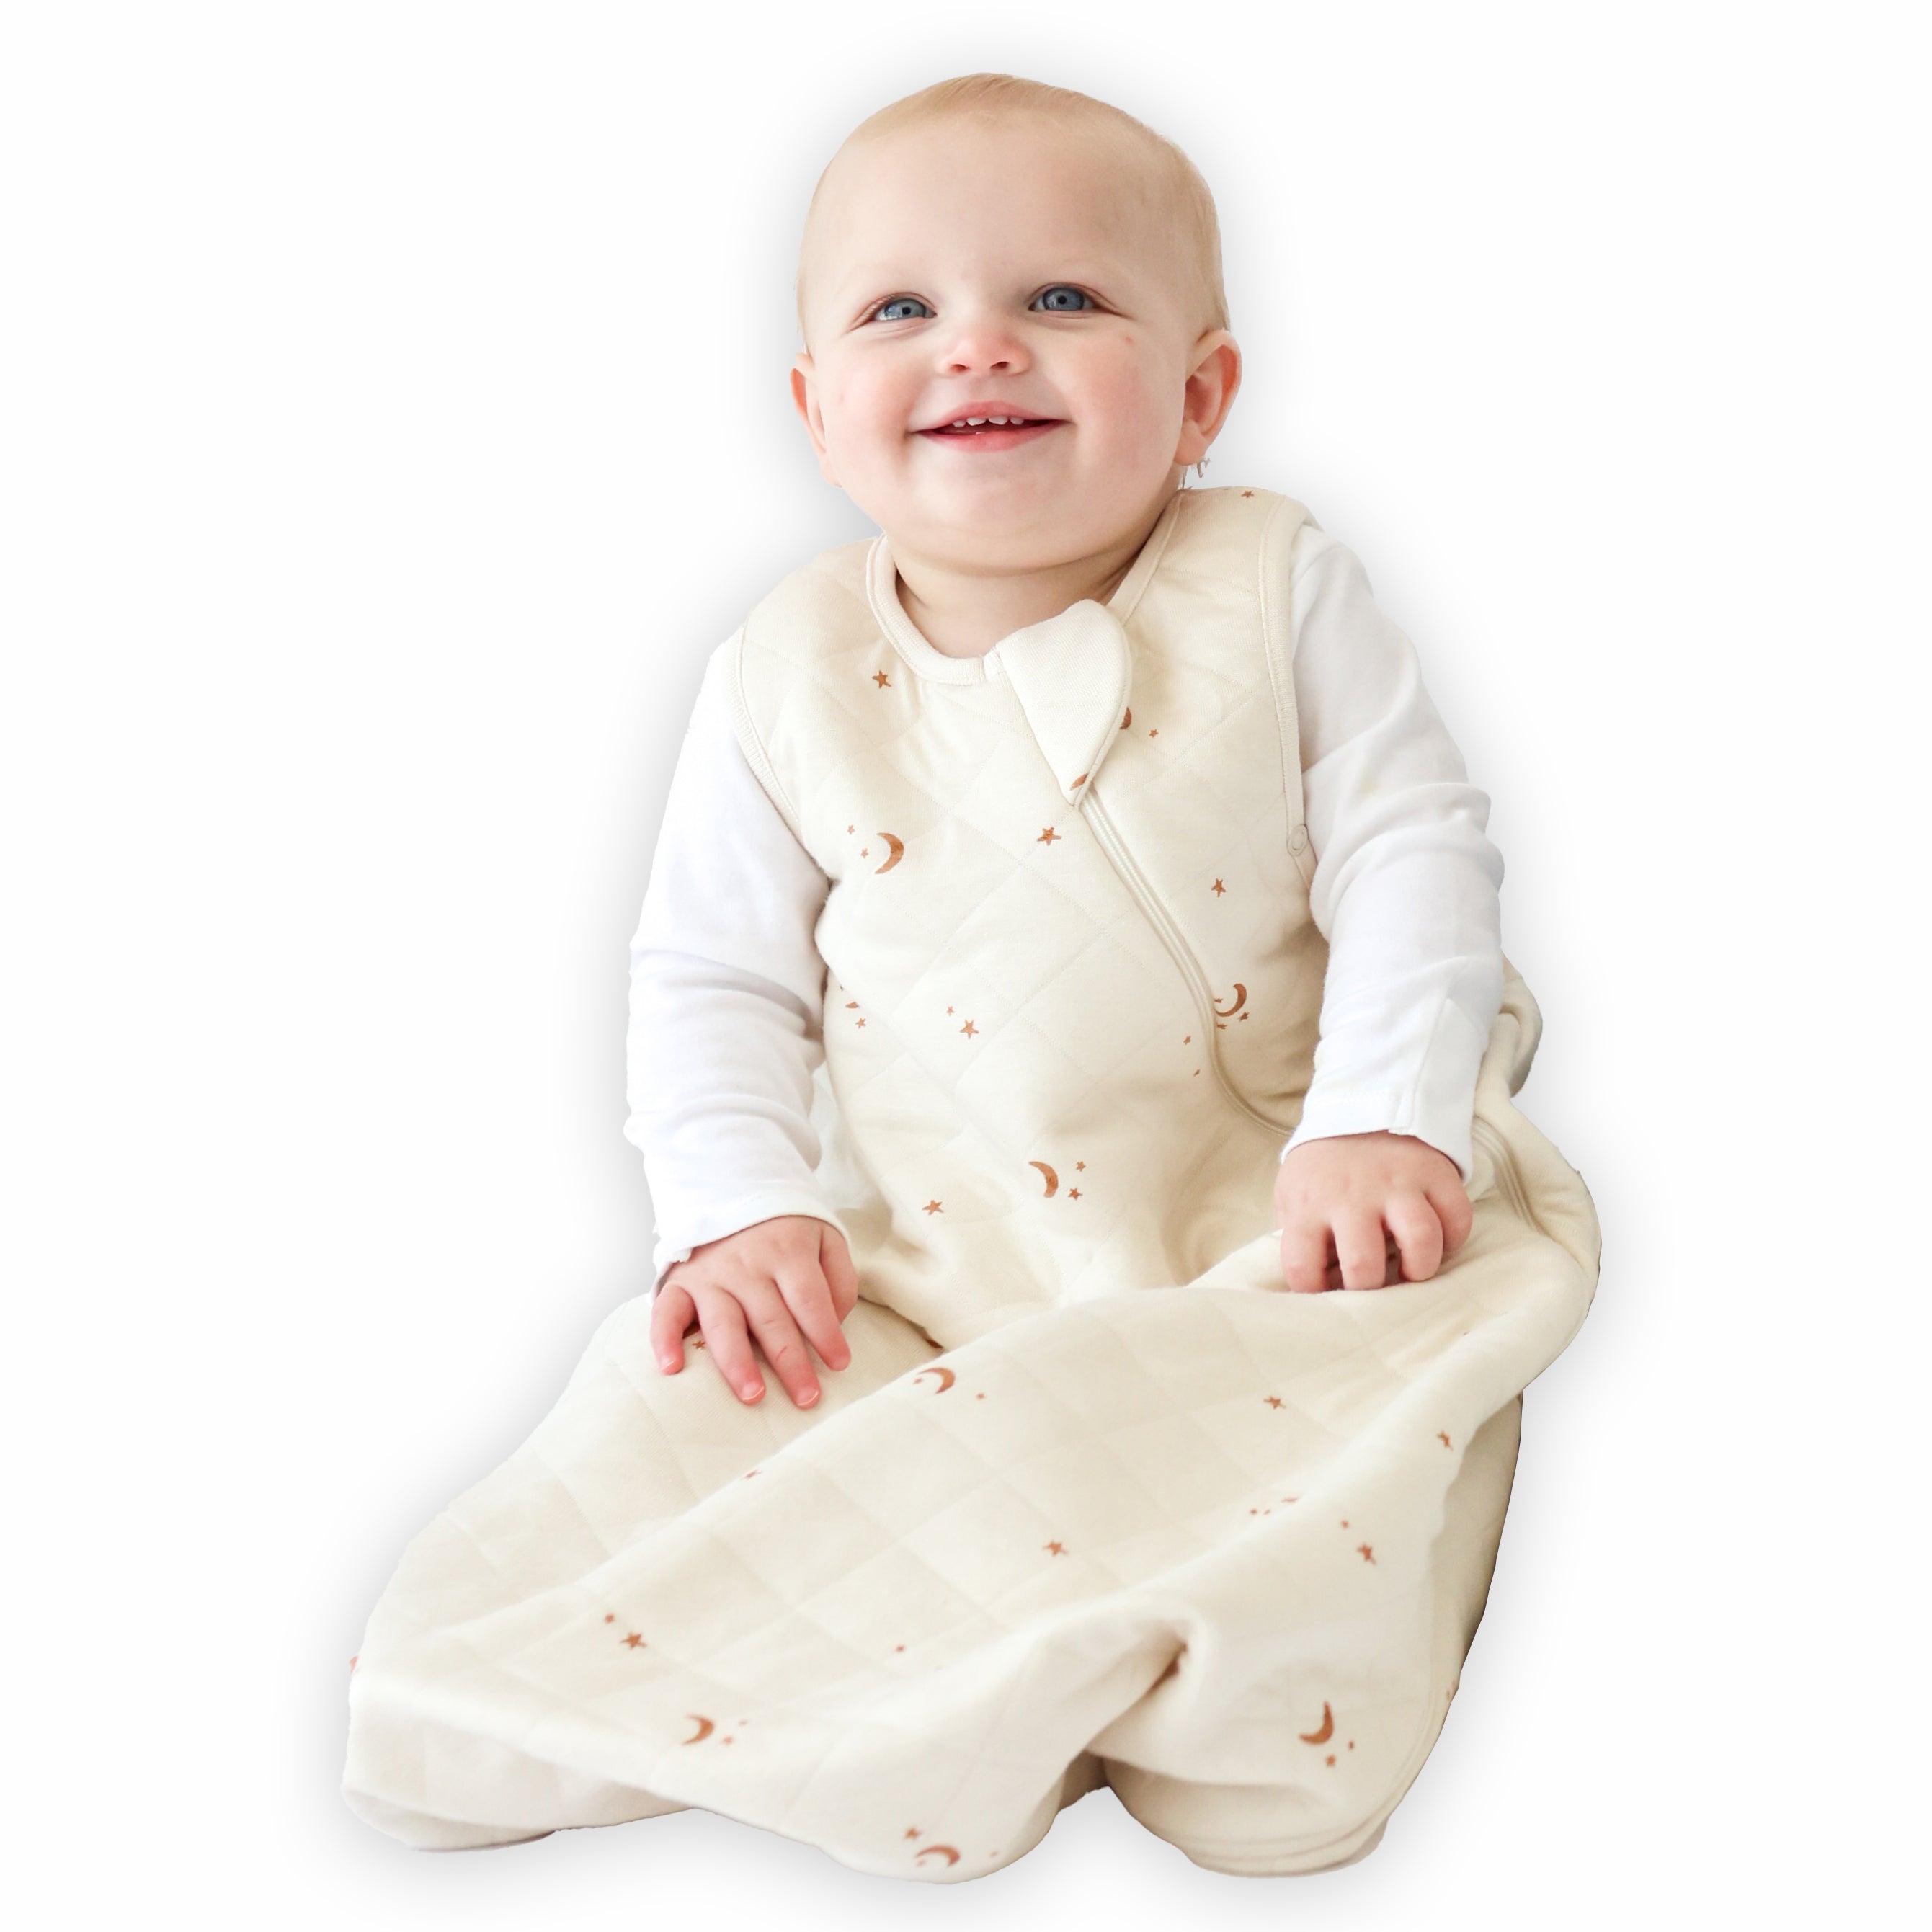 Baby wearing Sleep Sack Tealbee Dreambag Moons and Stars 1.2 TOG fits 6m to 24m